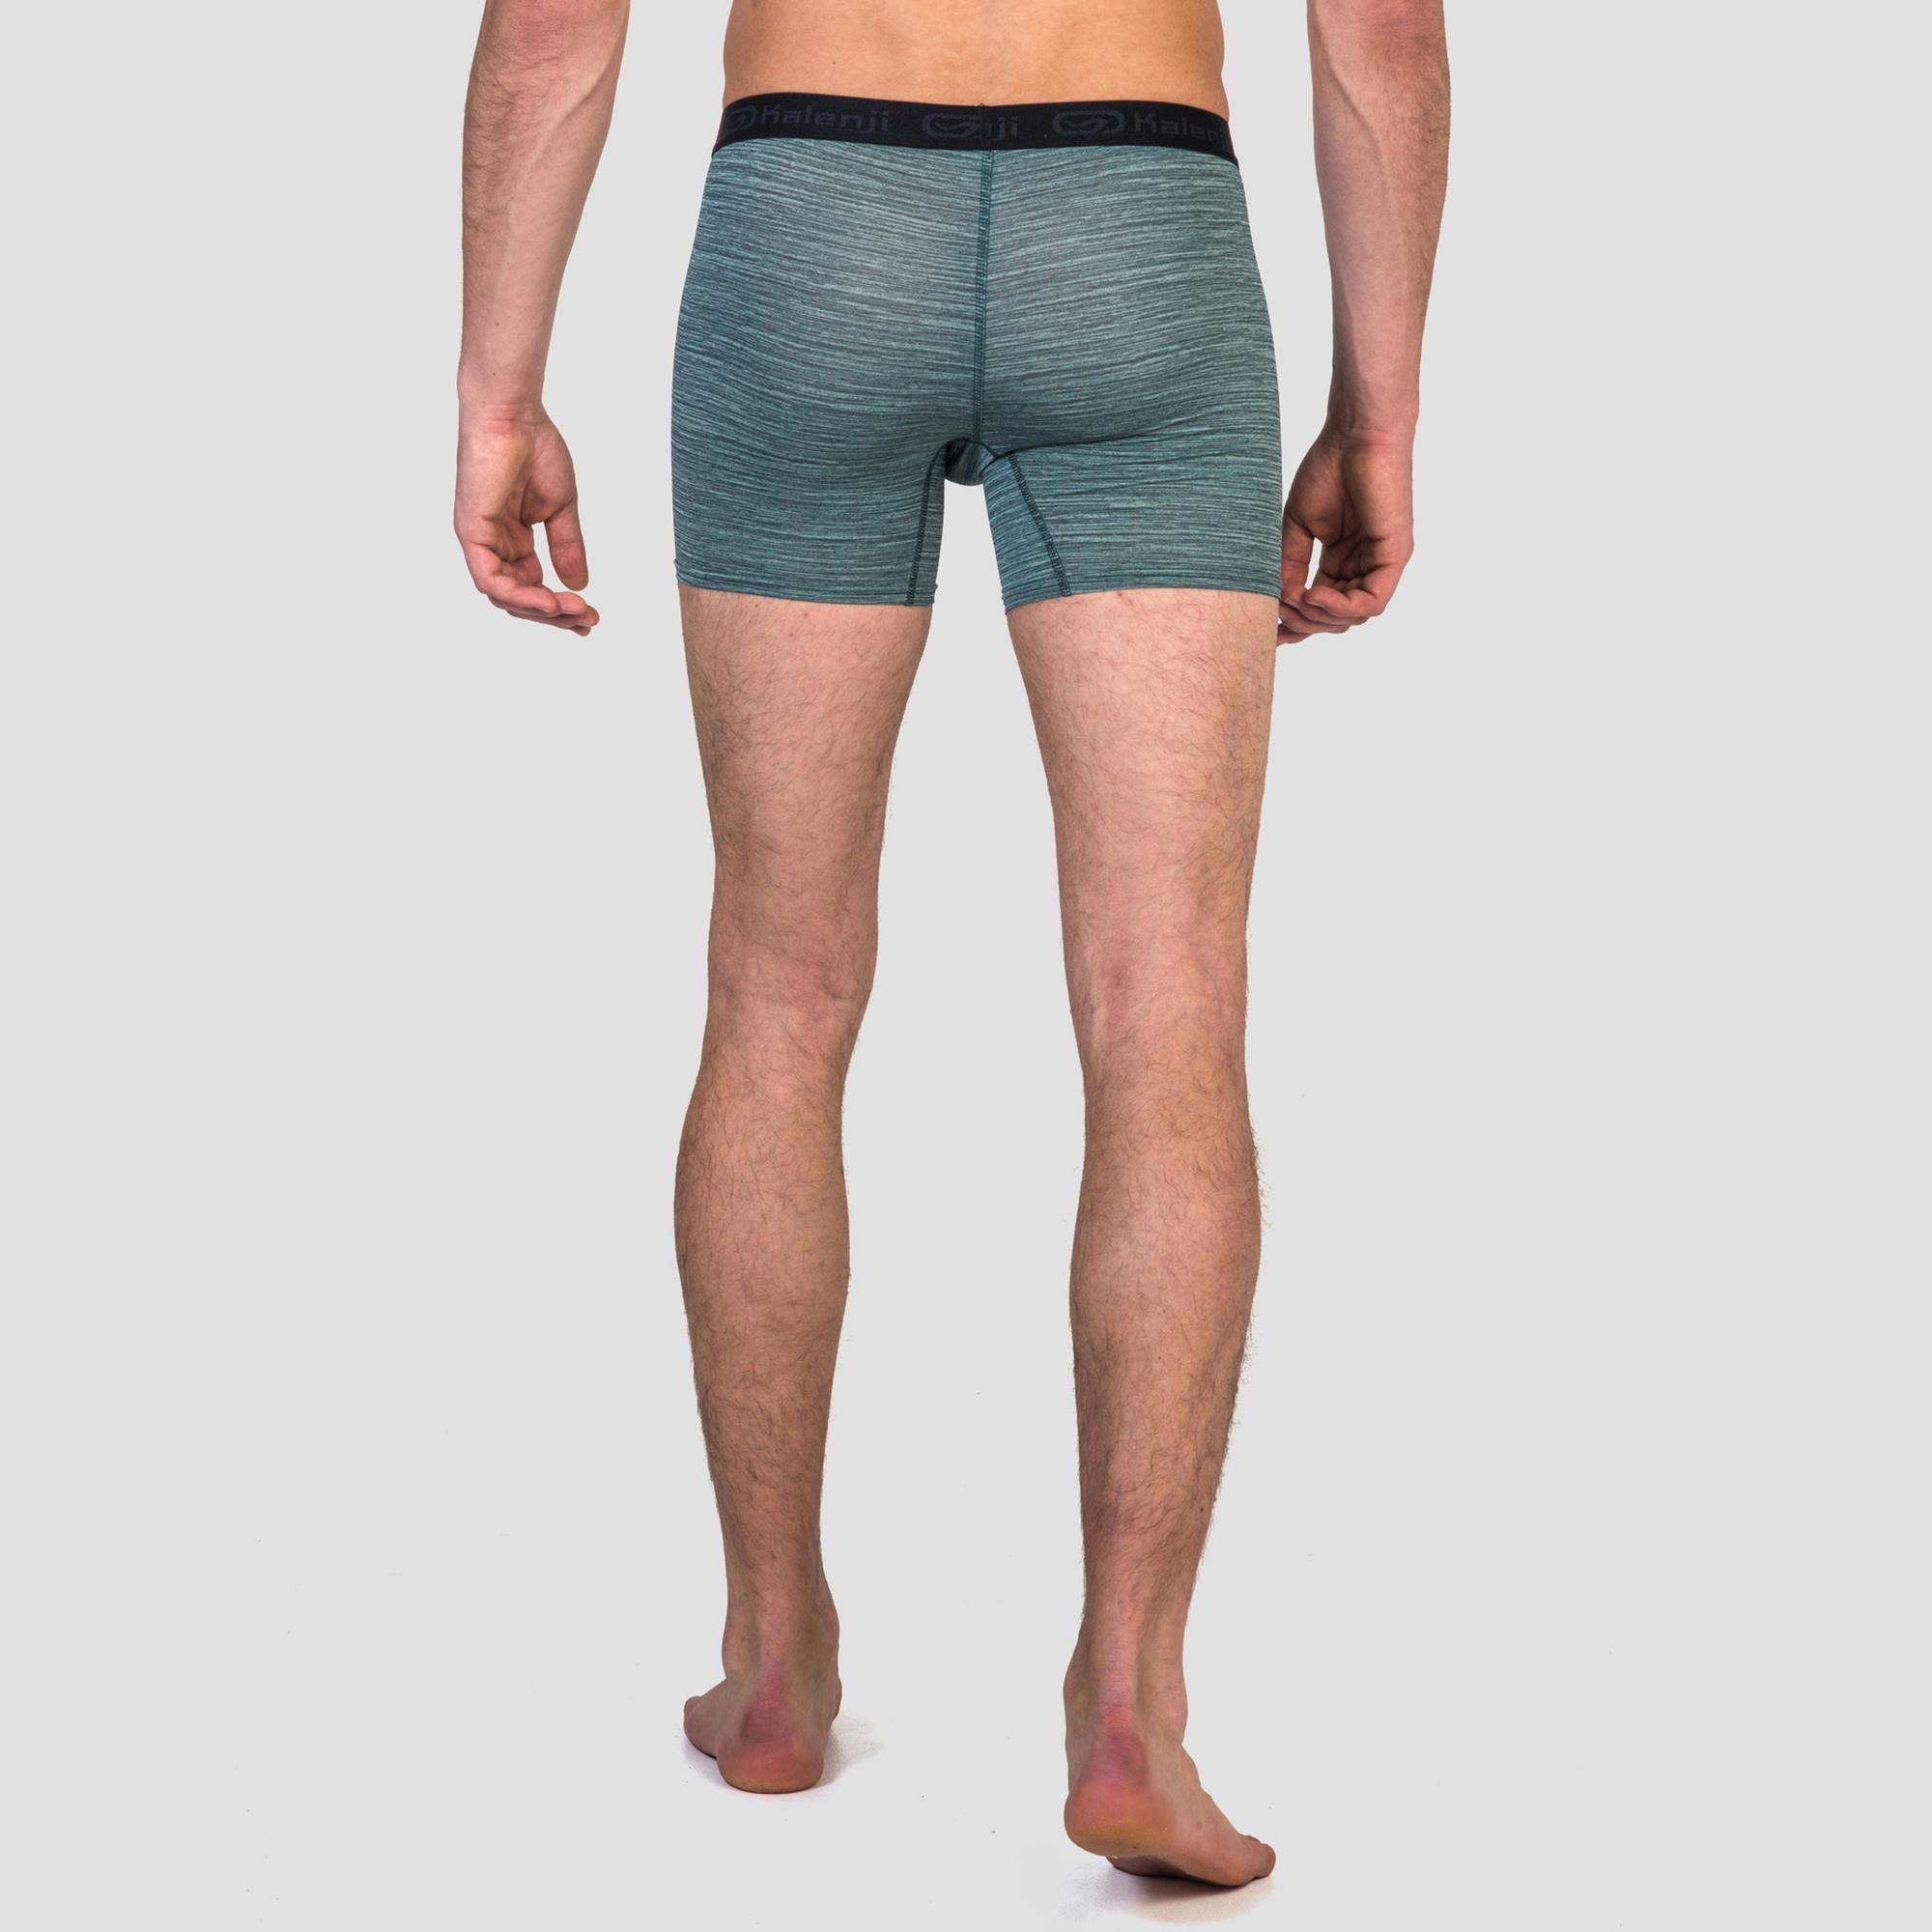 kalenji boxer shorts